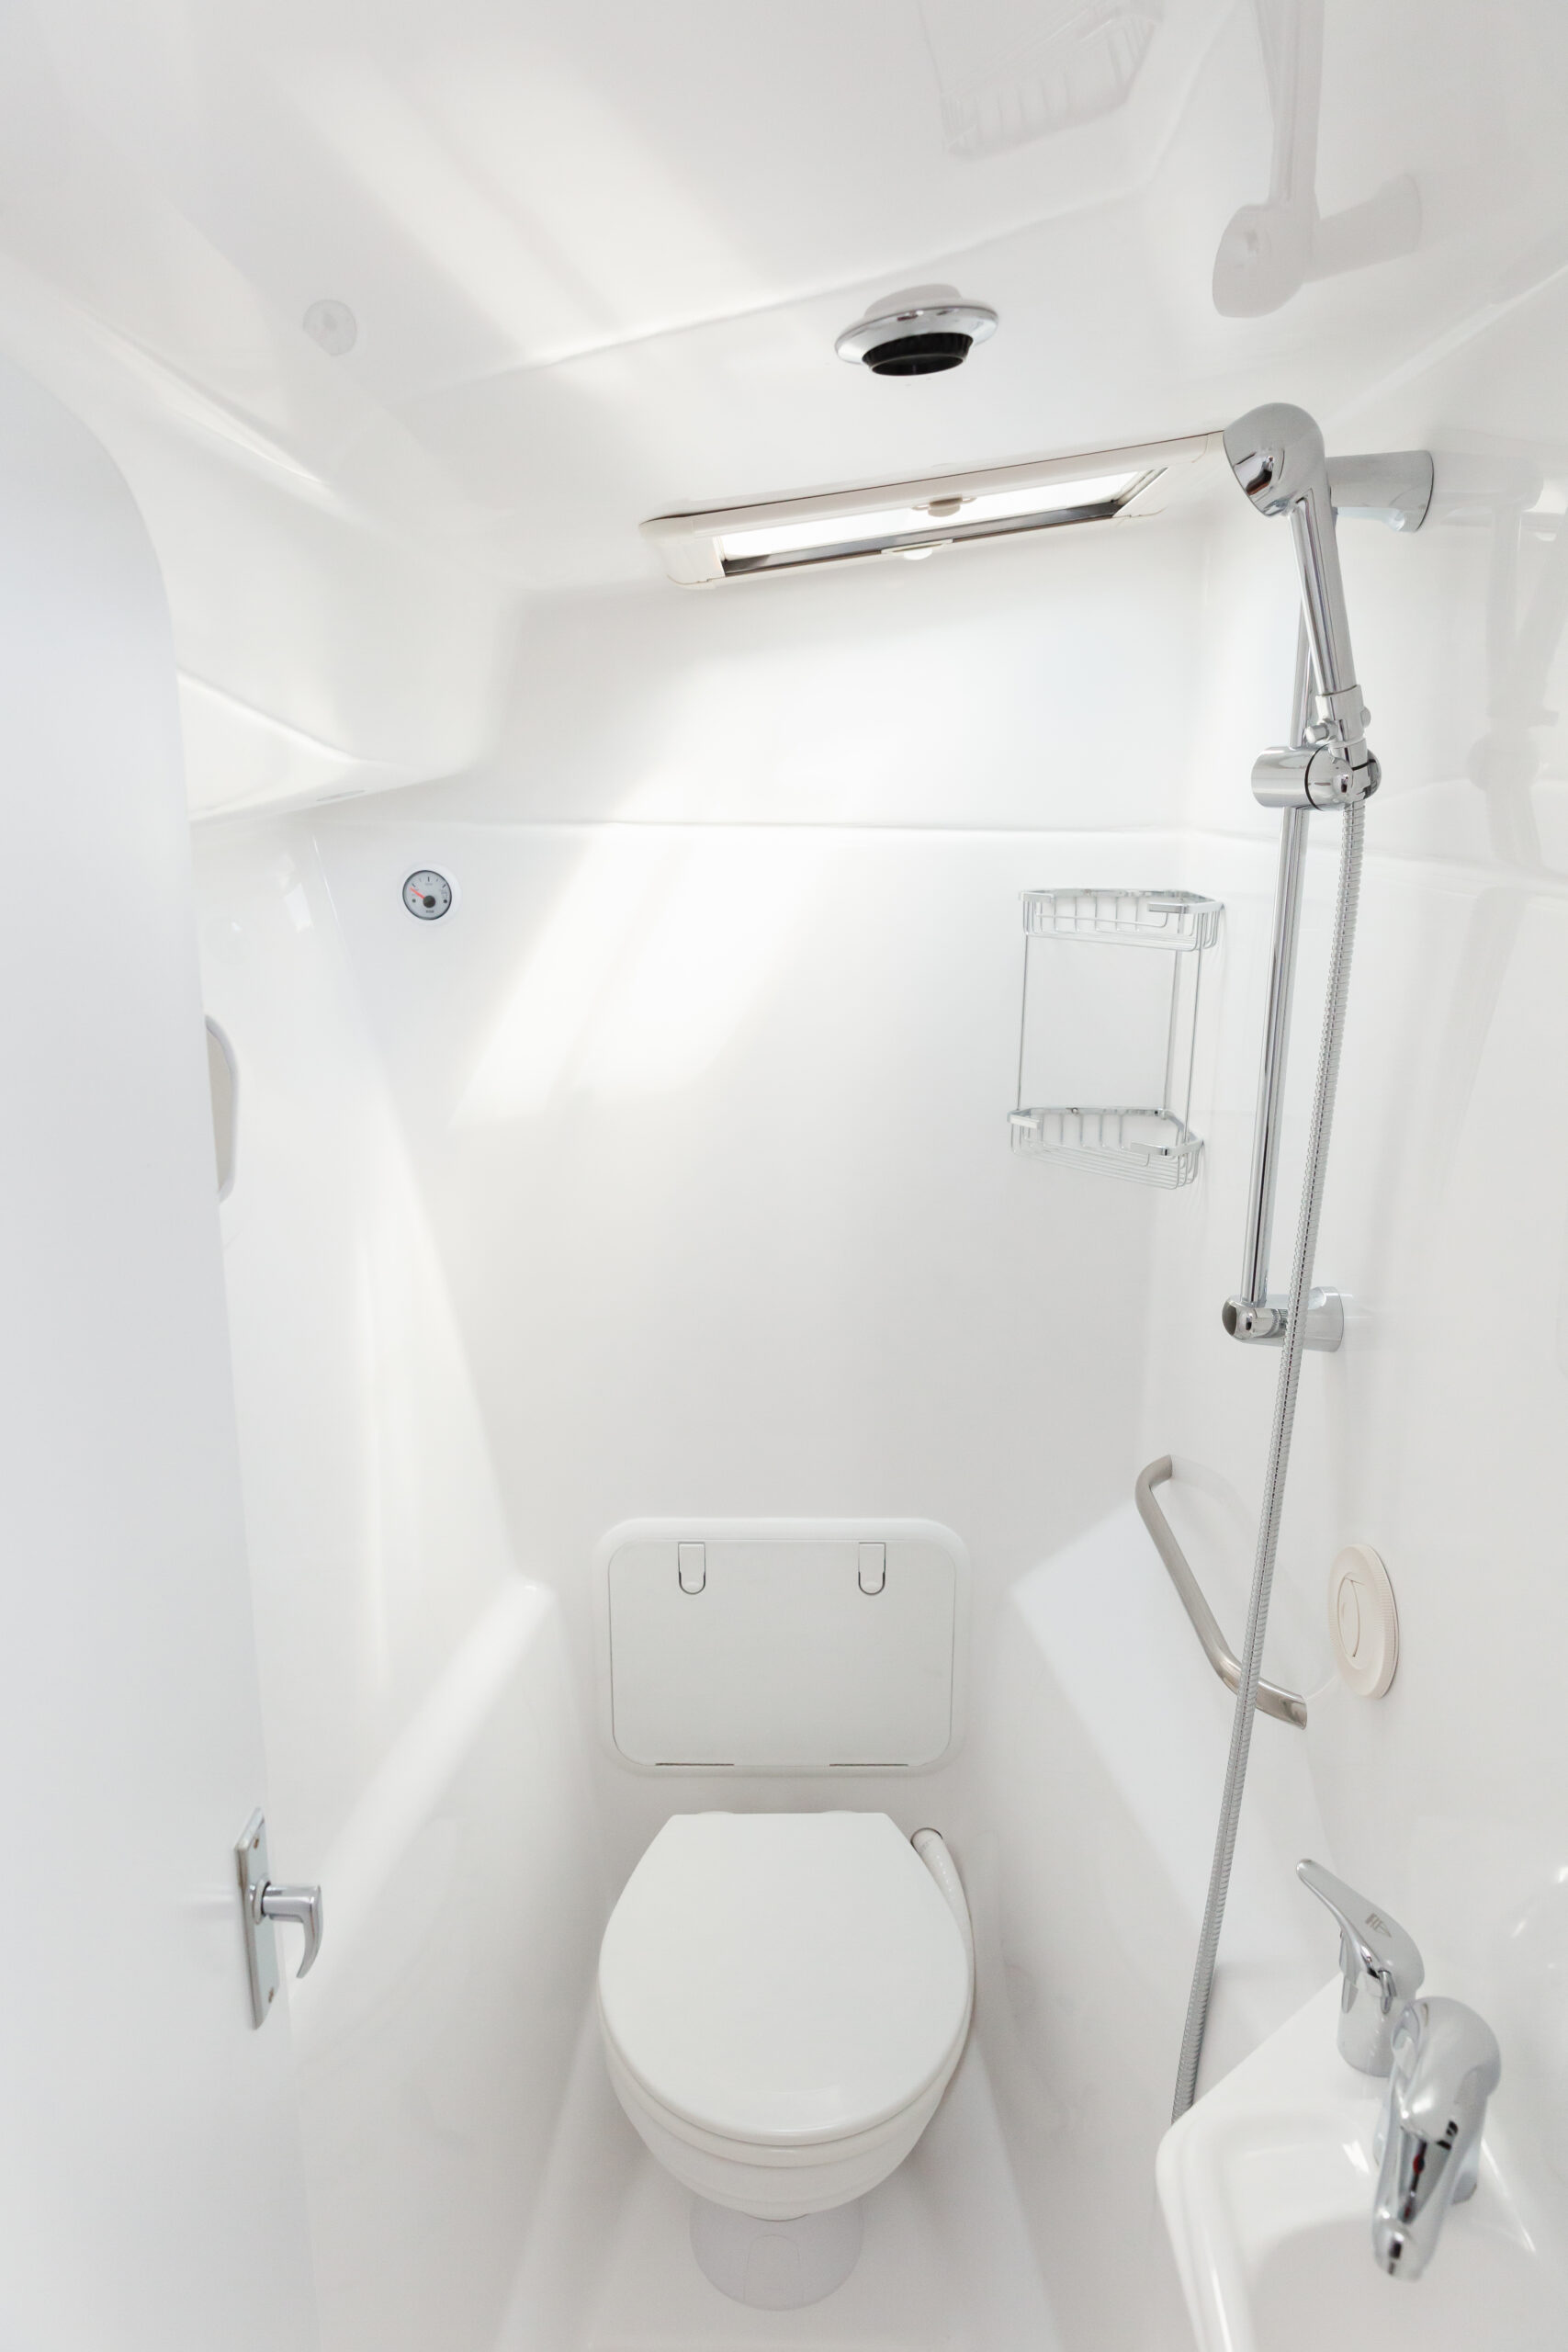 a bathroom on a boat